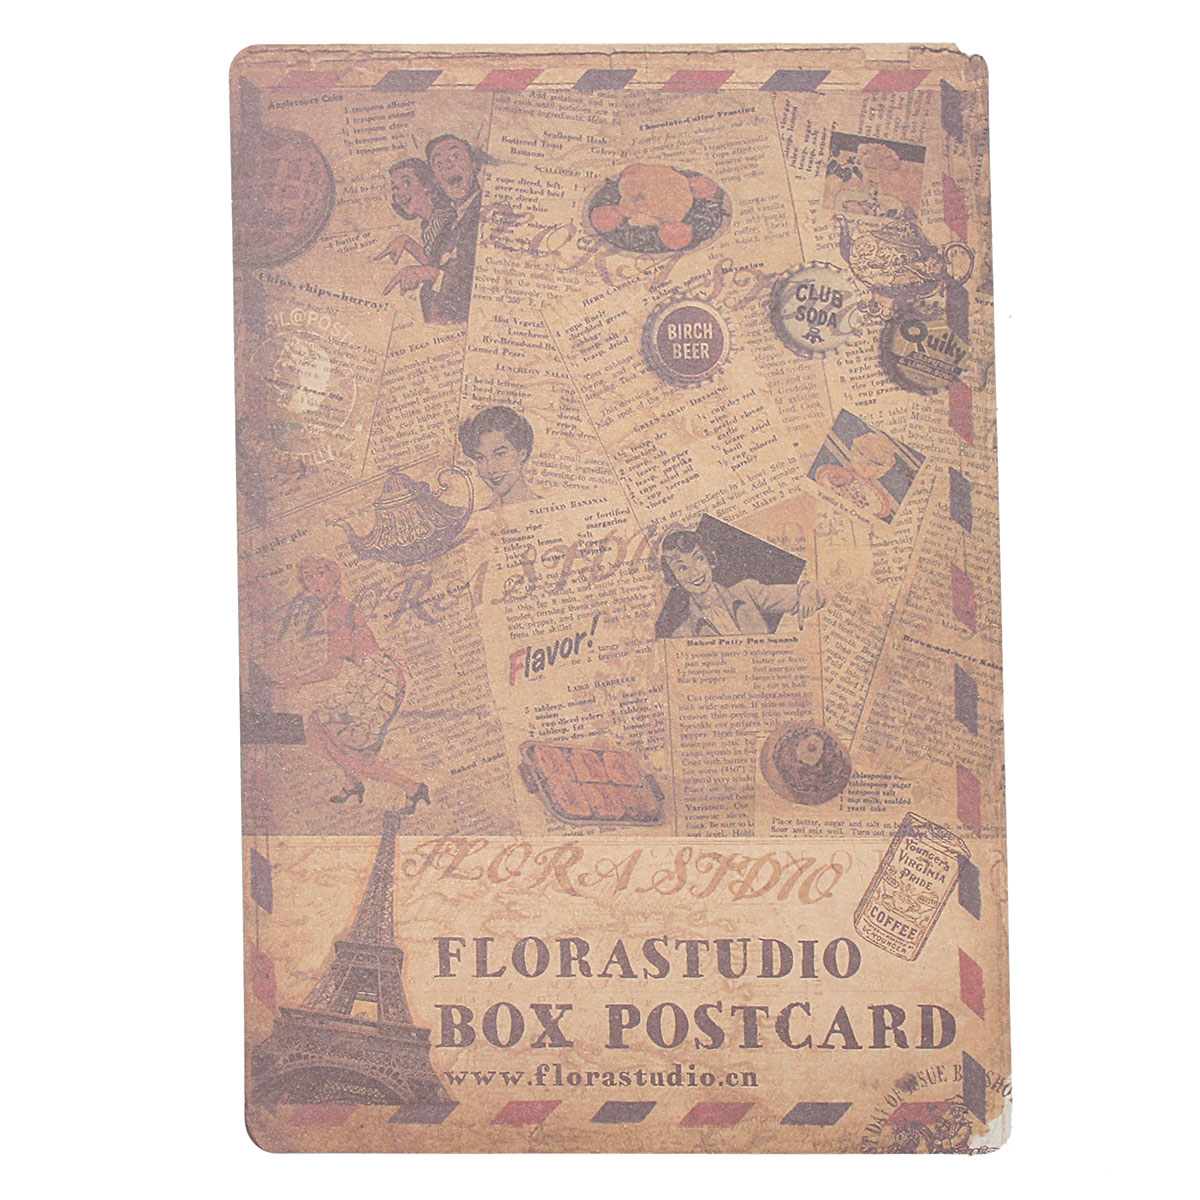 10-Sheet-Vintage-Paper-Stickers-DIY-Scrapbooking-Photo-Album-Diary-Craft-Decor-1141352